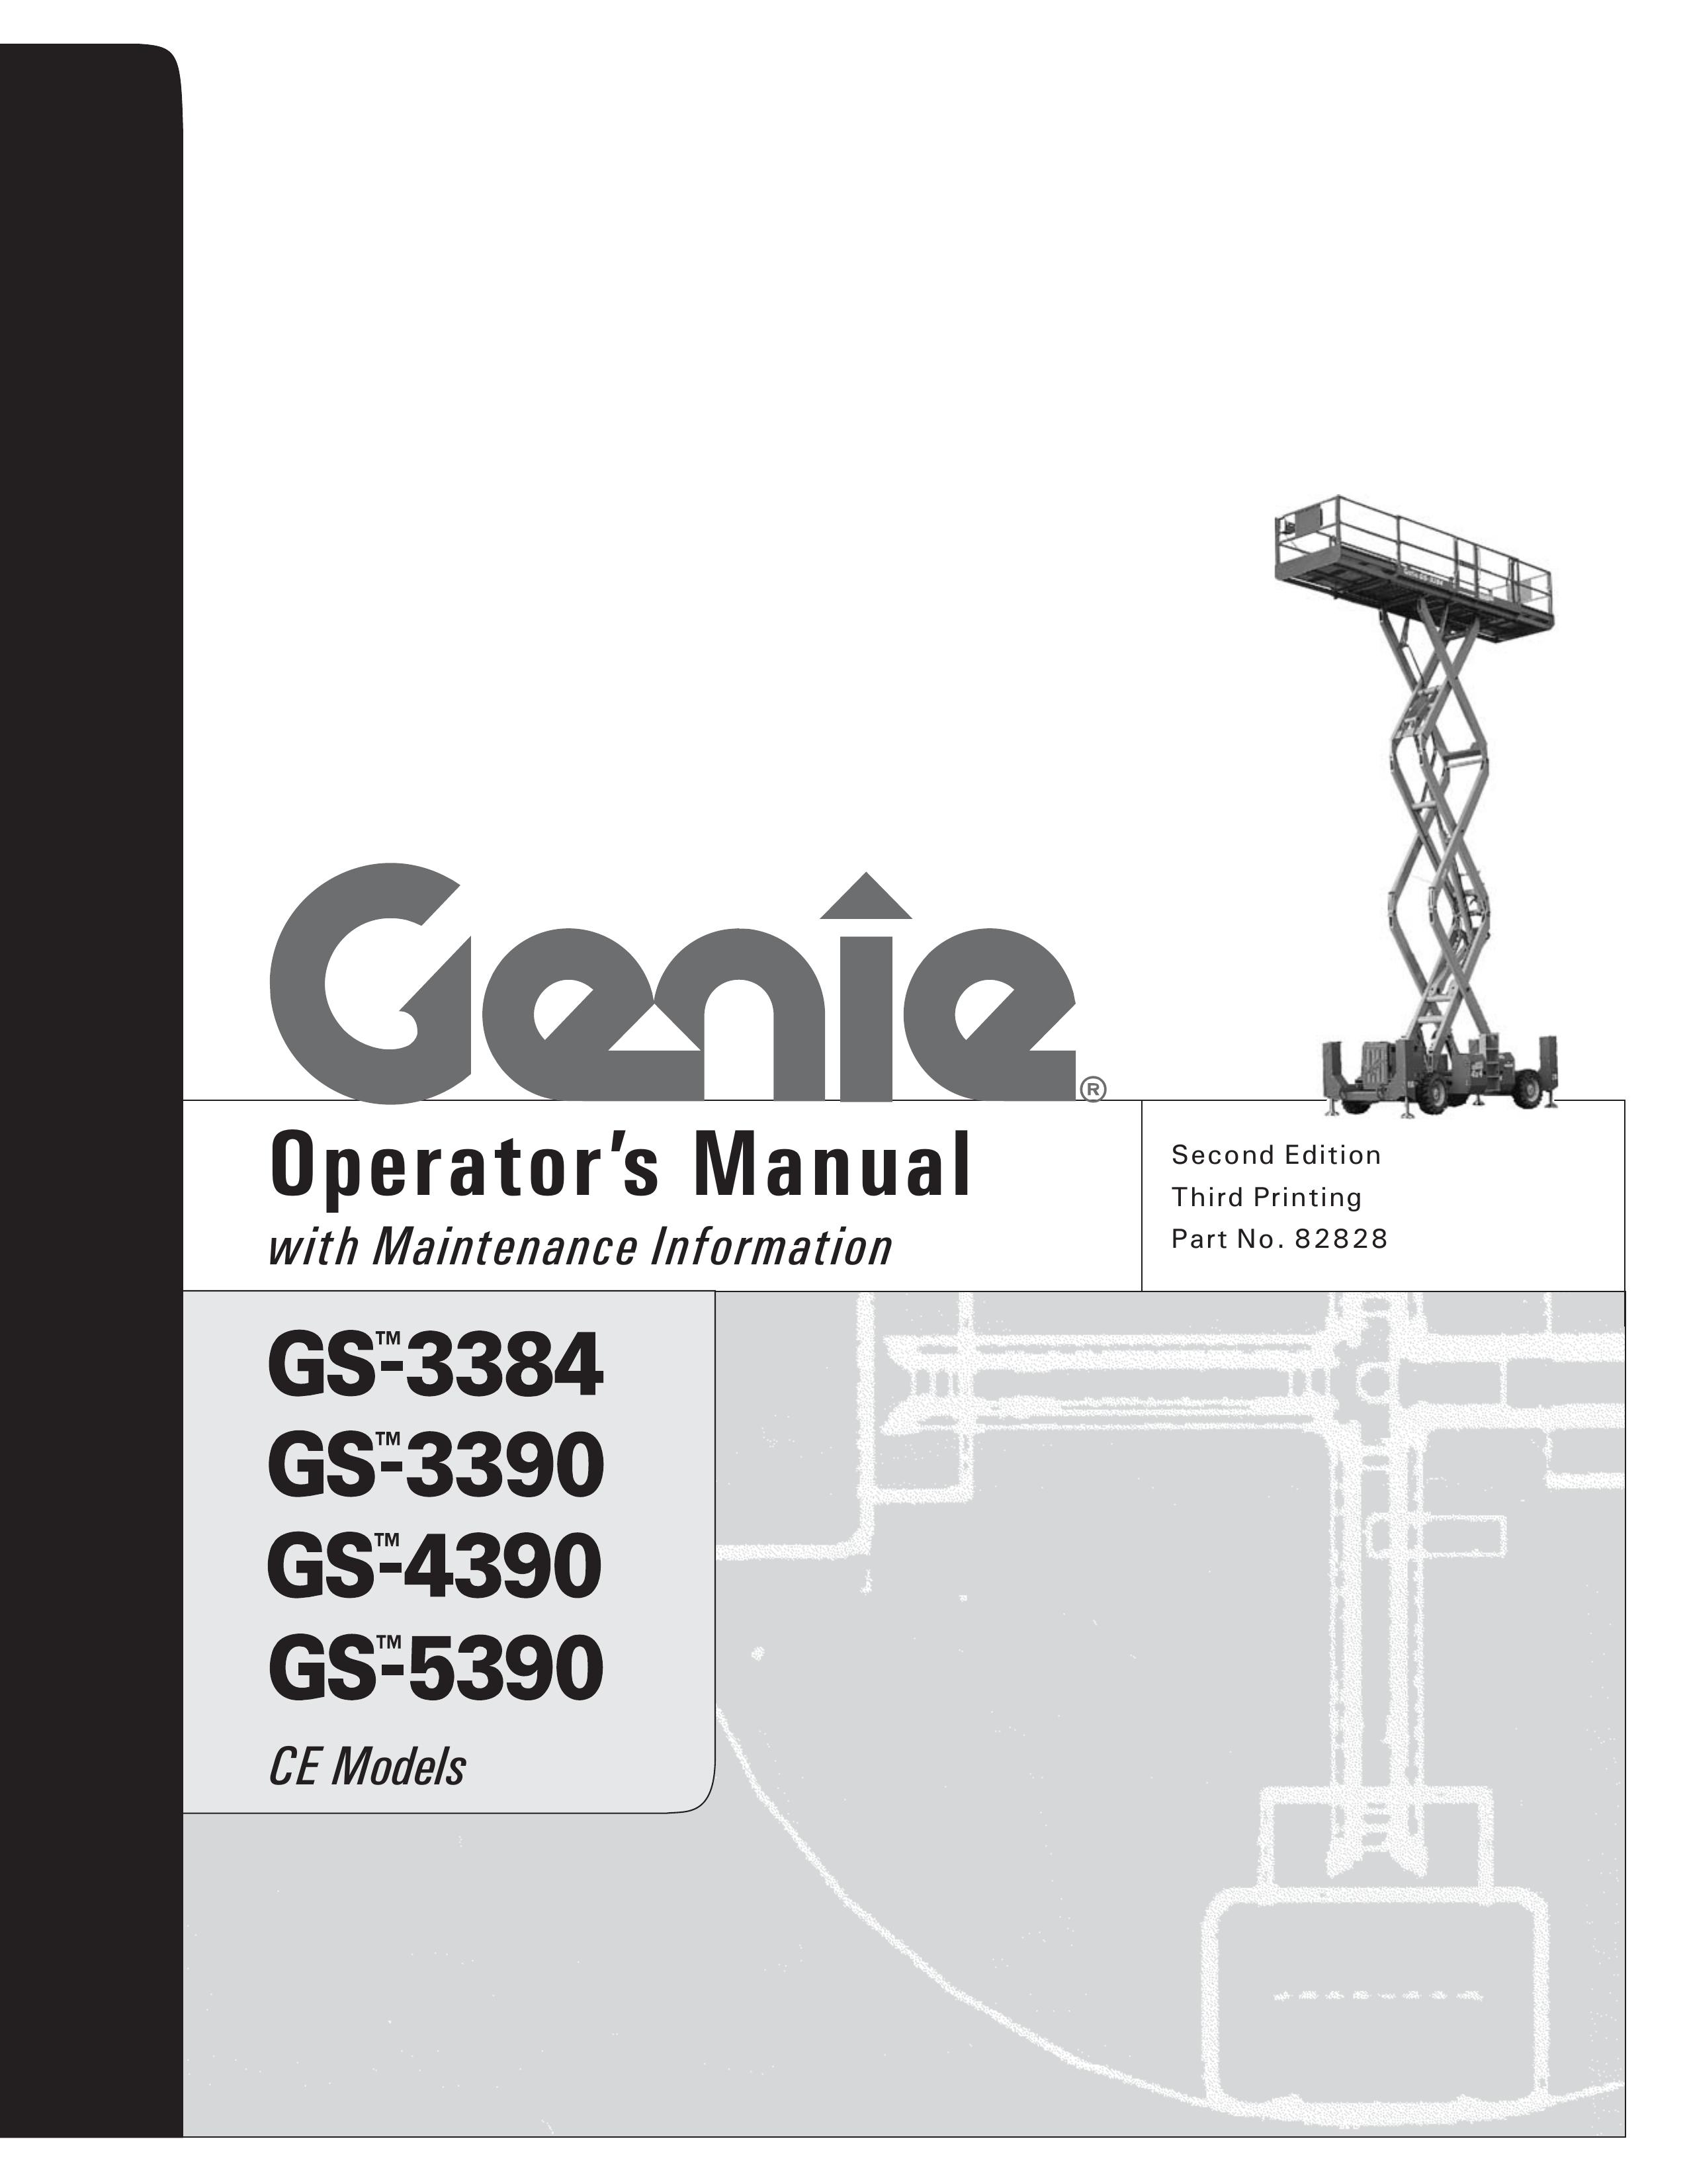 Genie GS-5390 Utility Vehicle User Manual